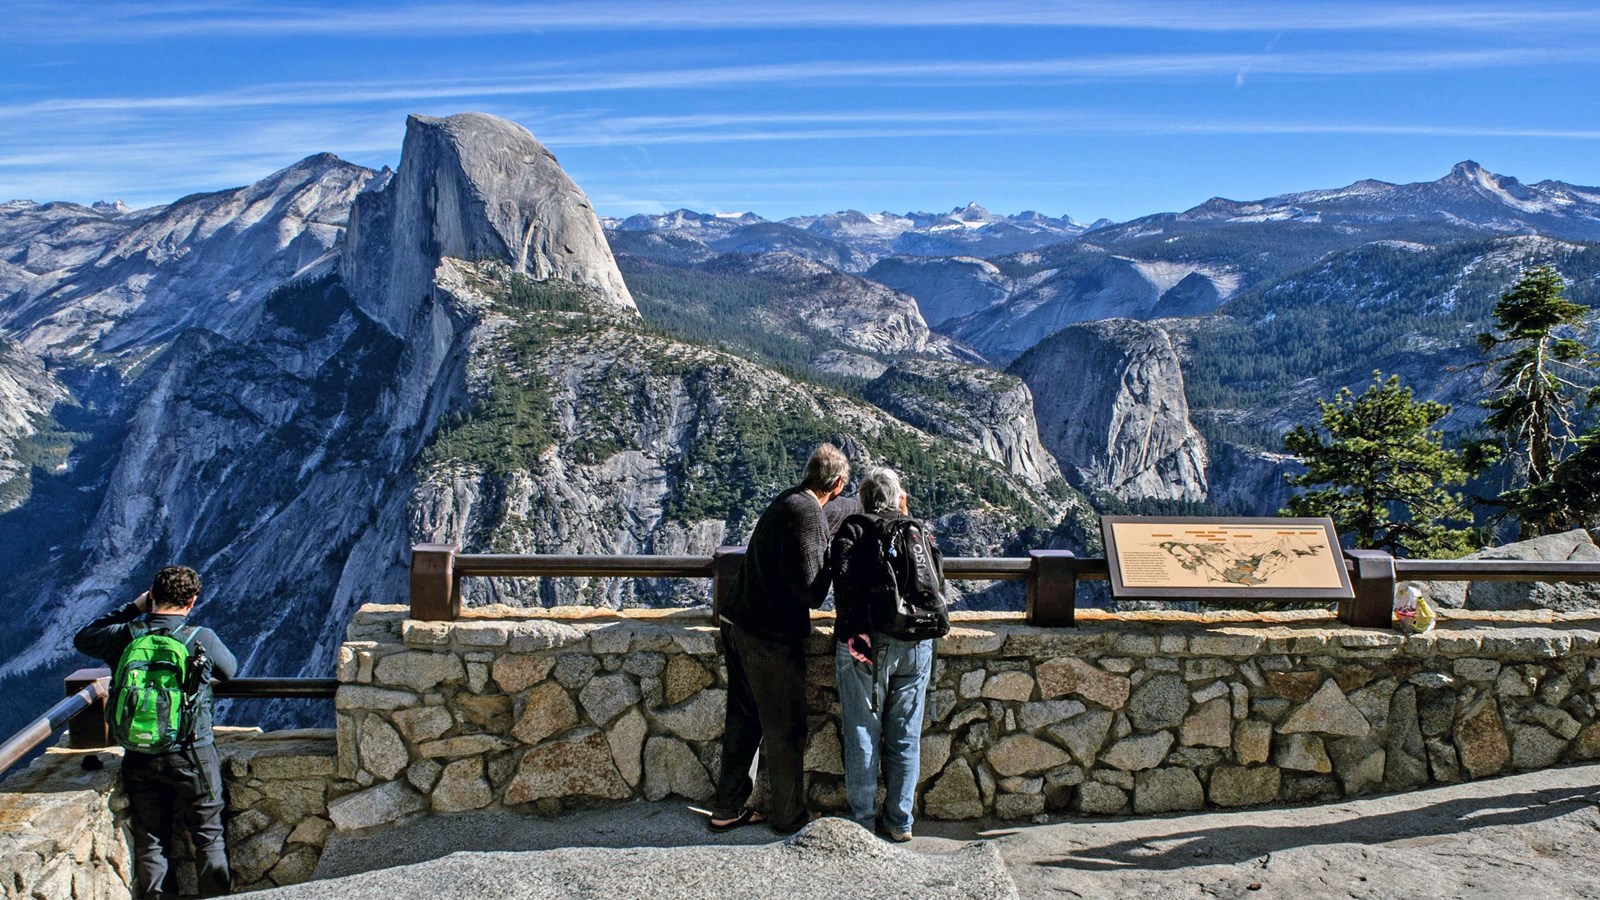 Glacier Point - Yosemite National Park (U.S. National Park Service)